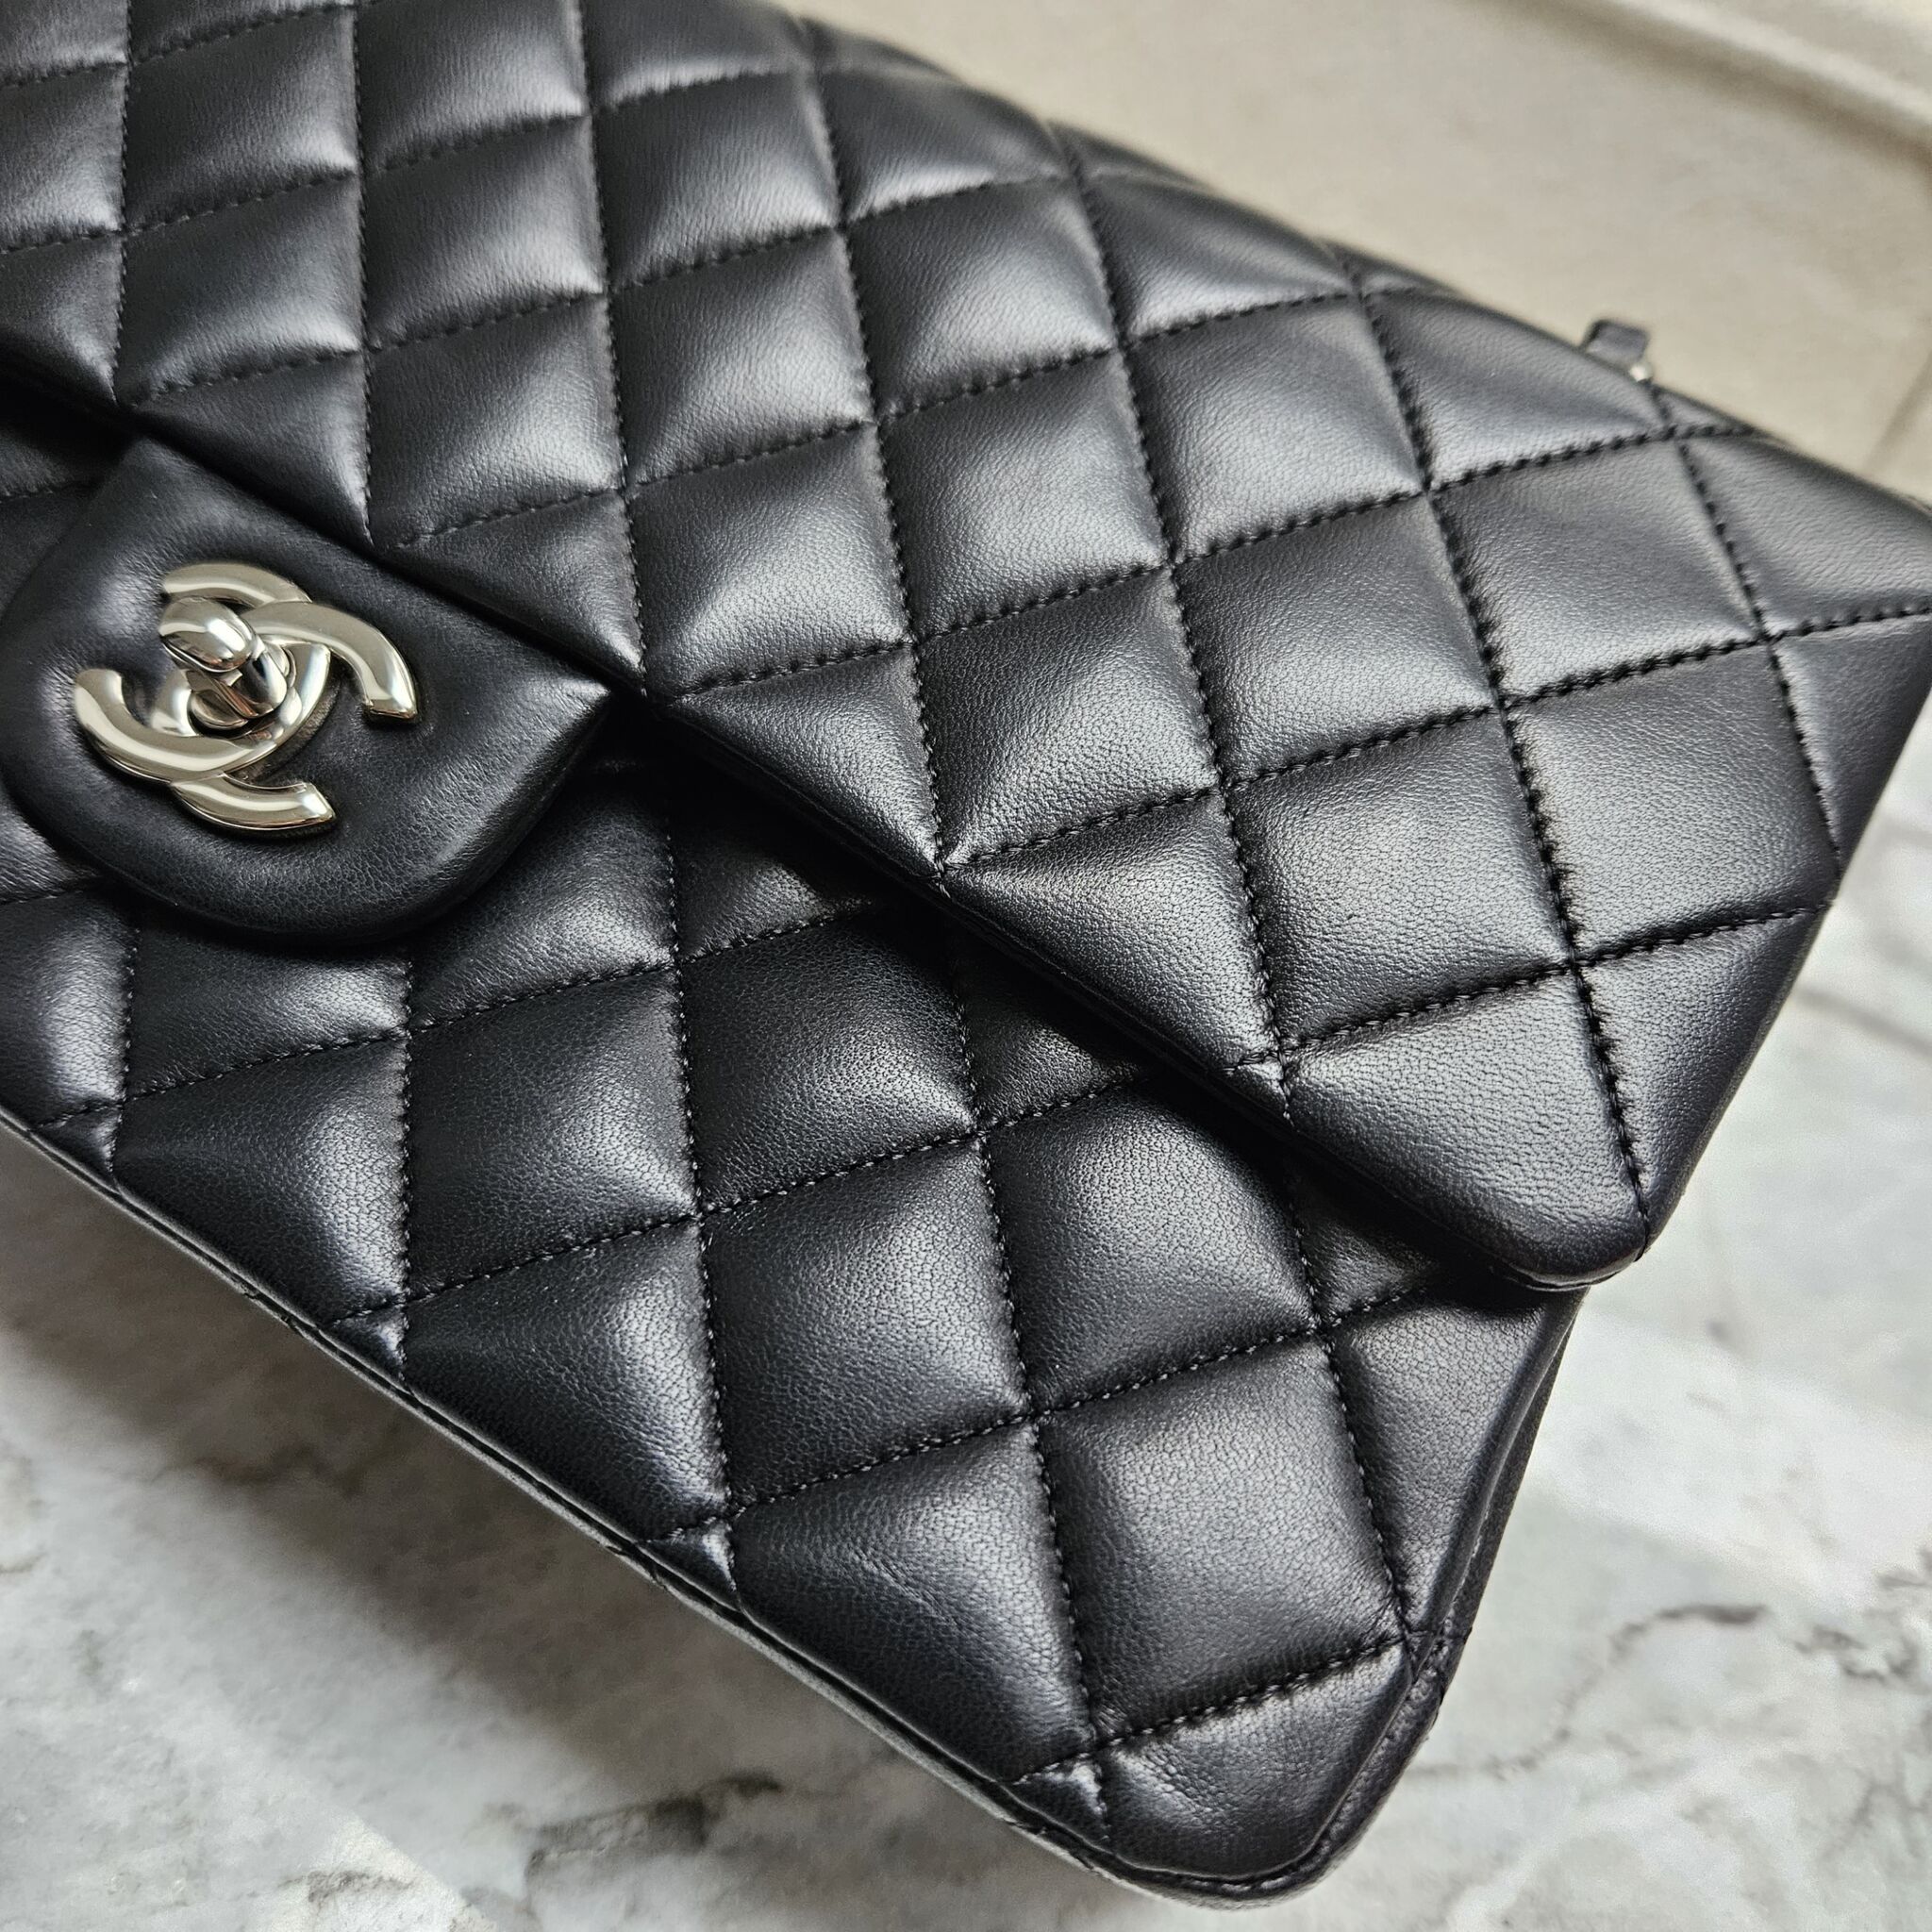 Chanel Vintage Medium Classic, Lambskin, Black SHW - Laulay Luxury